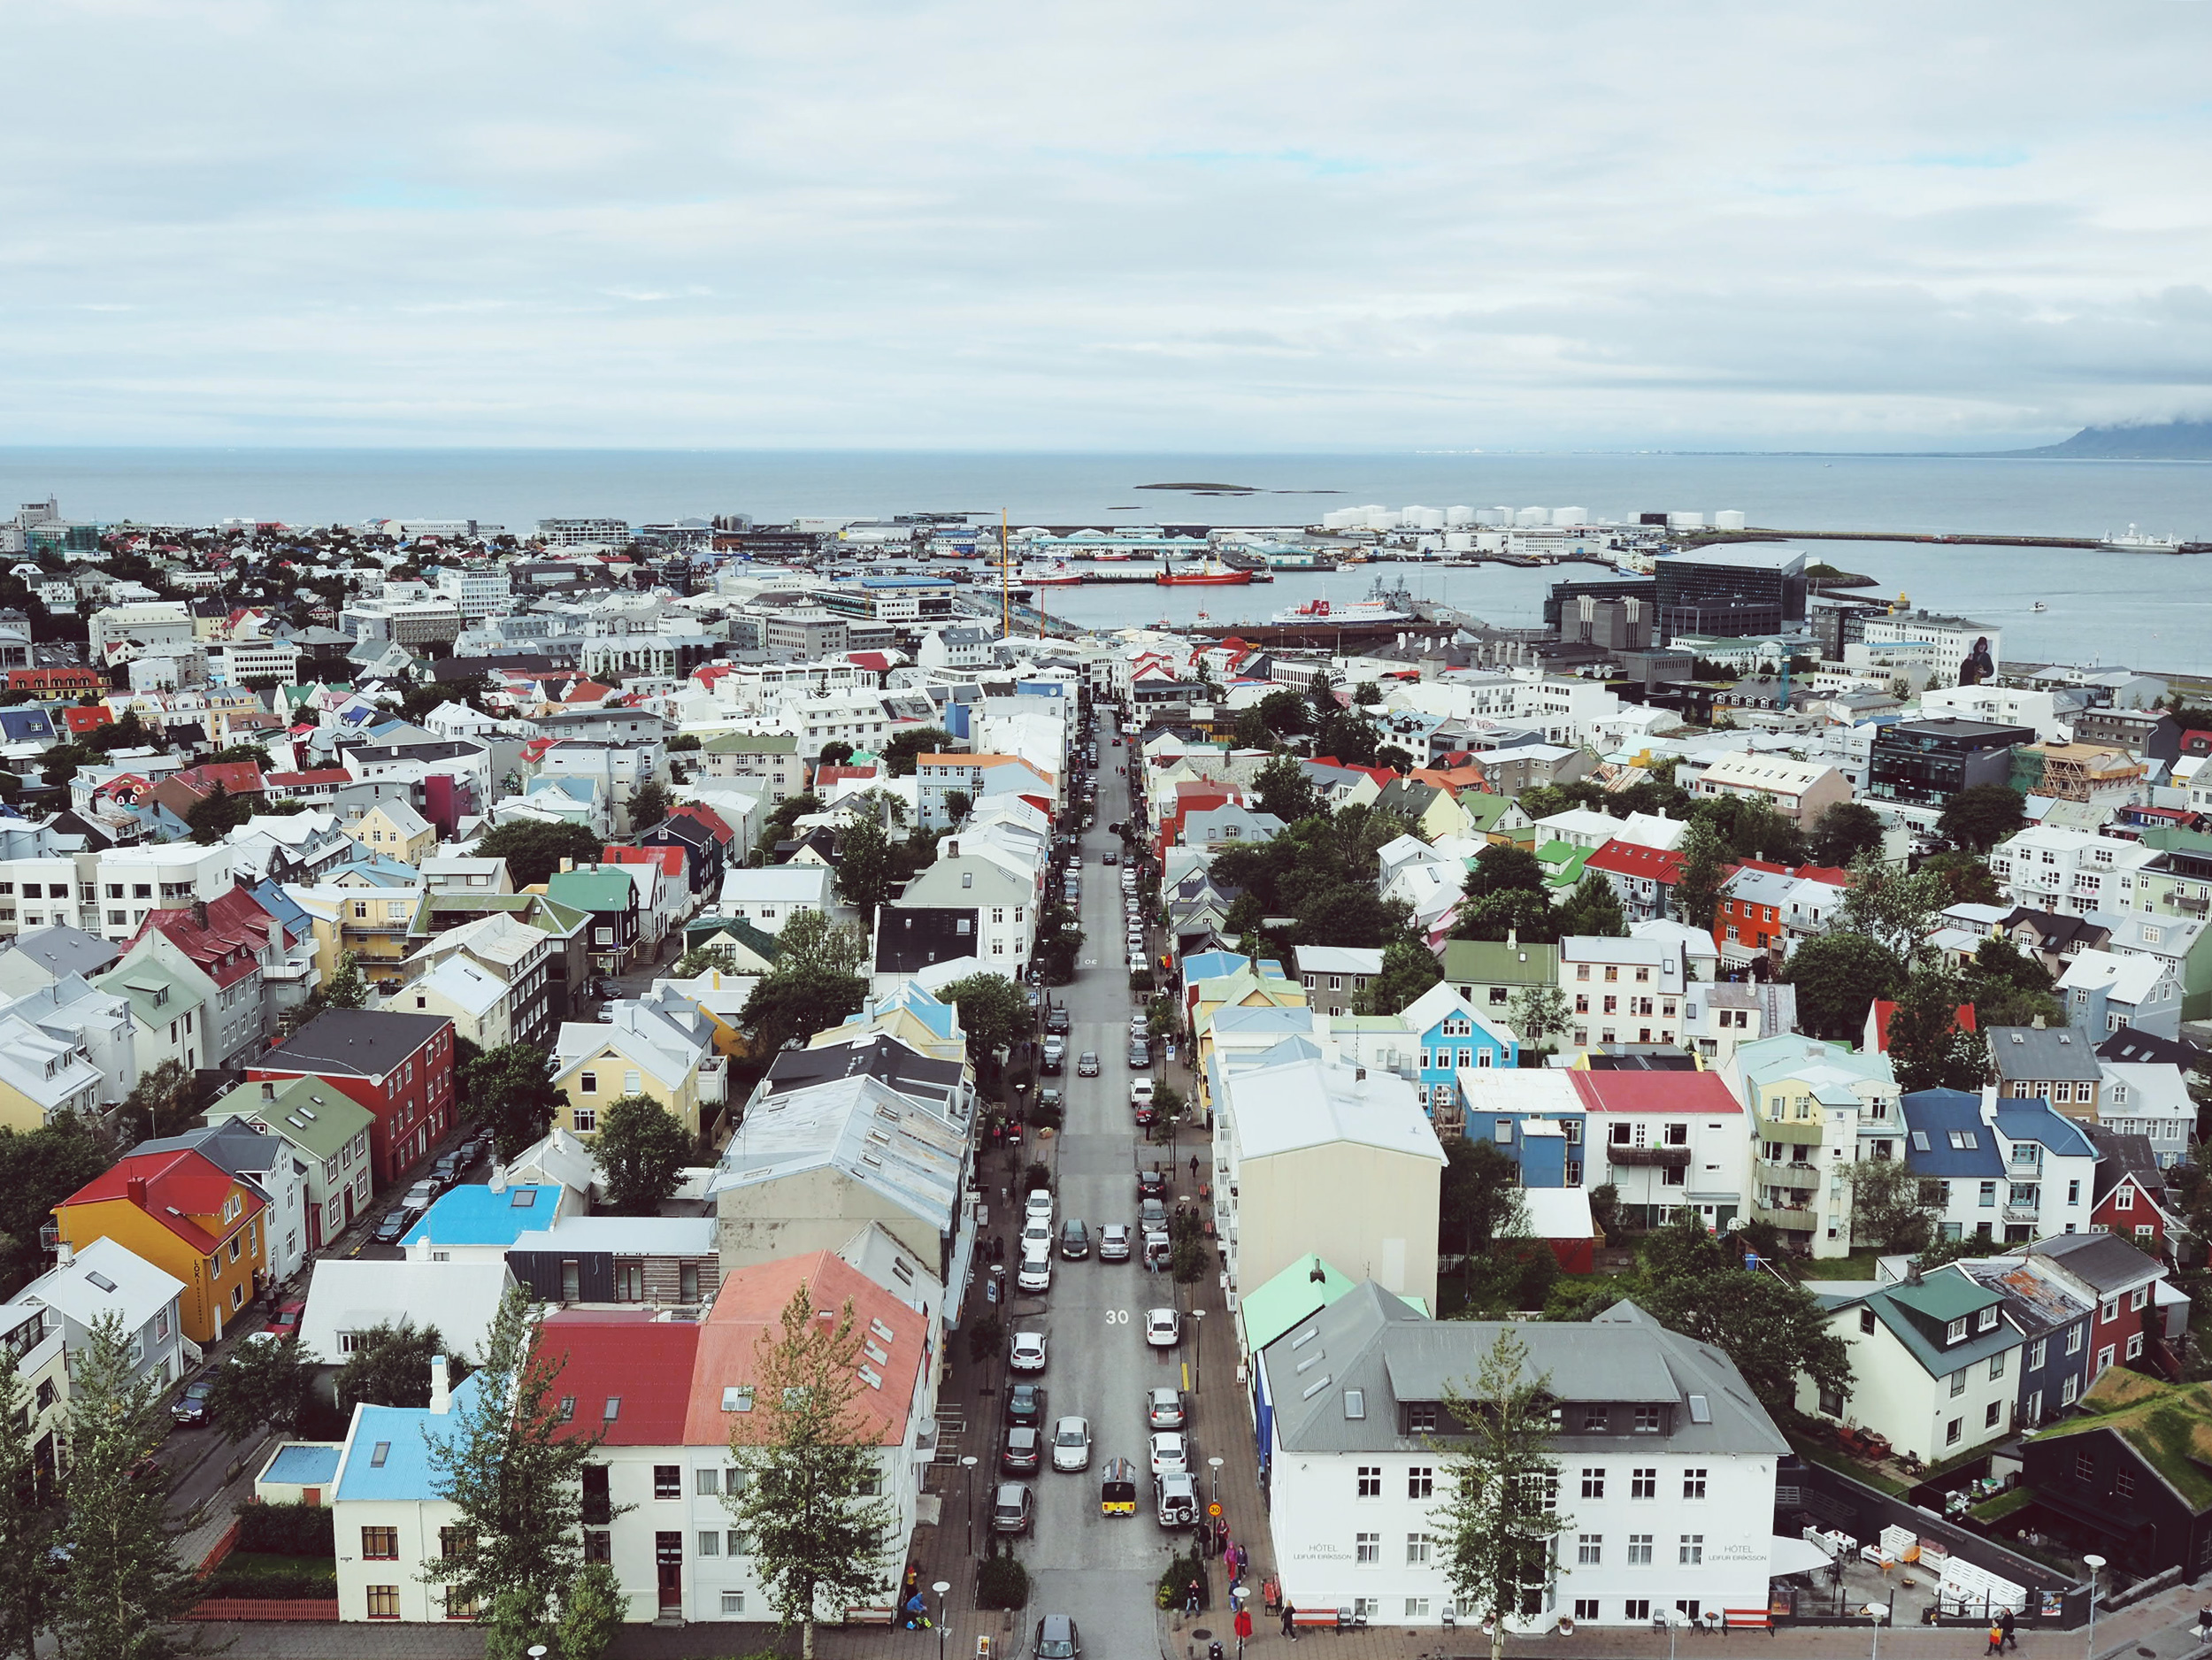 Postcard from Reykjavik